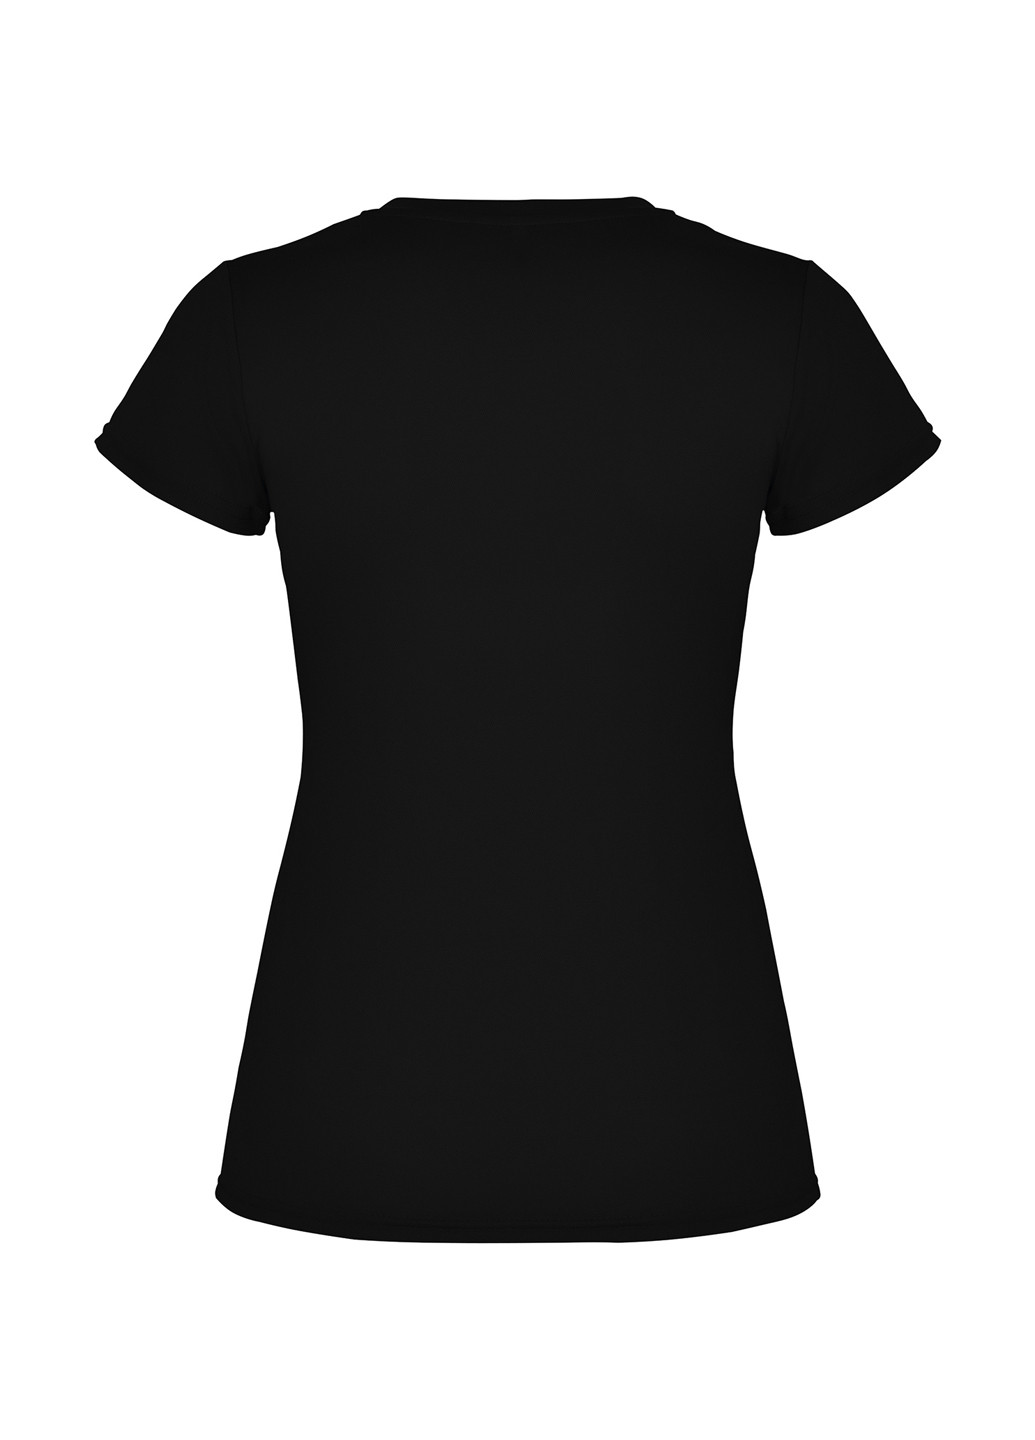 Черно-белая летняя футболка с коротким рукавом Roly